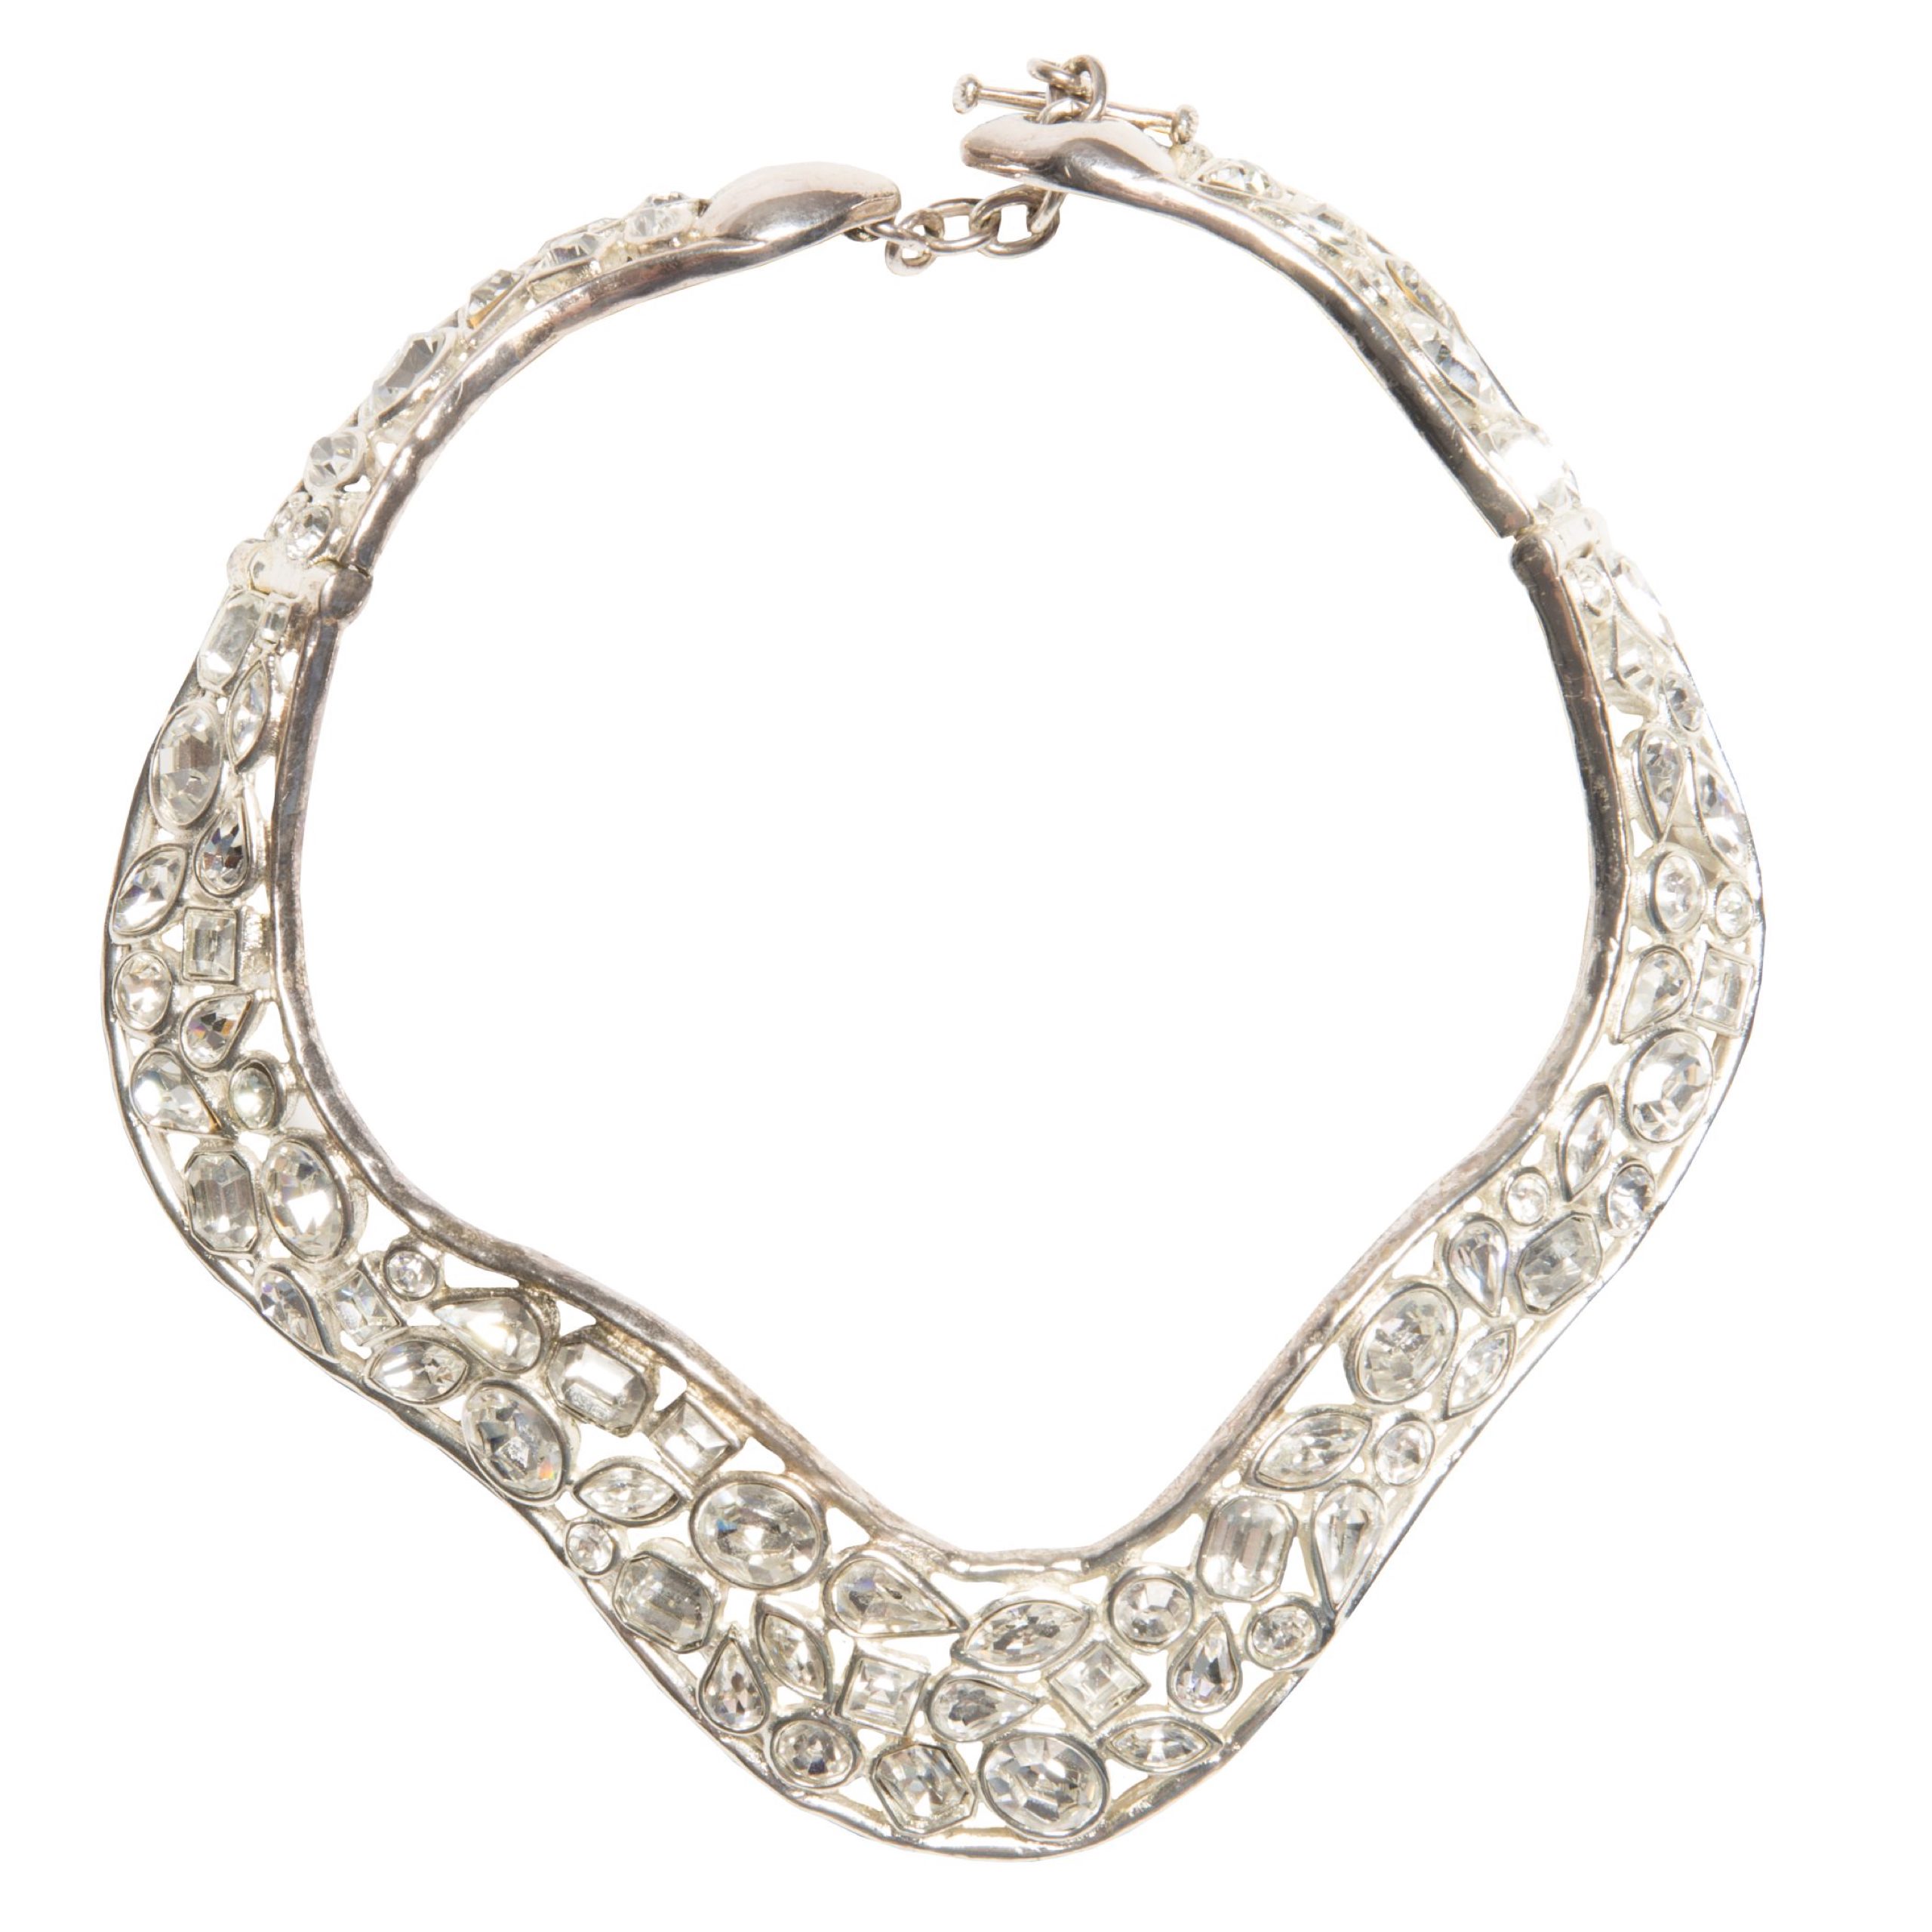 Vintage haute couture crystal detail necklace